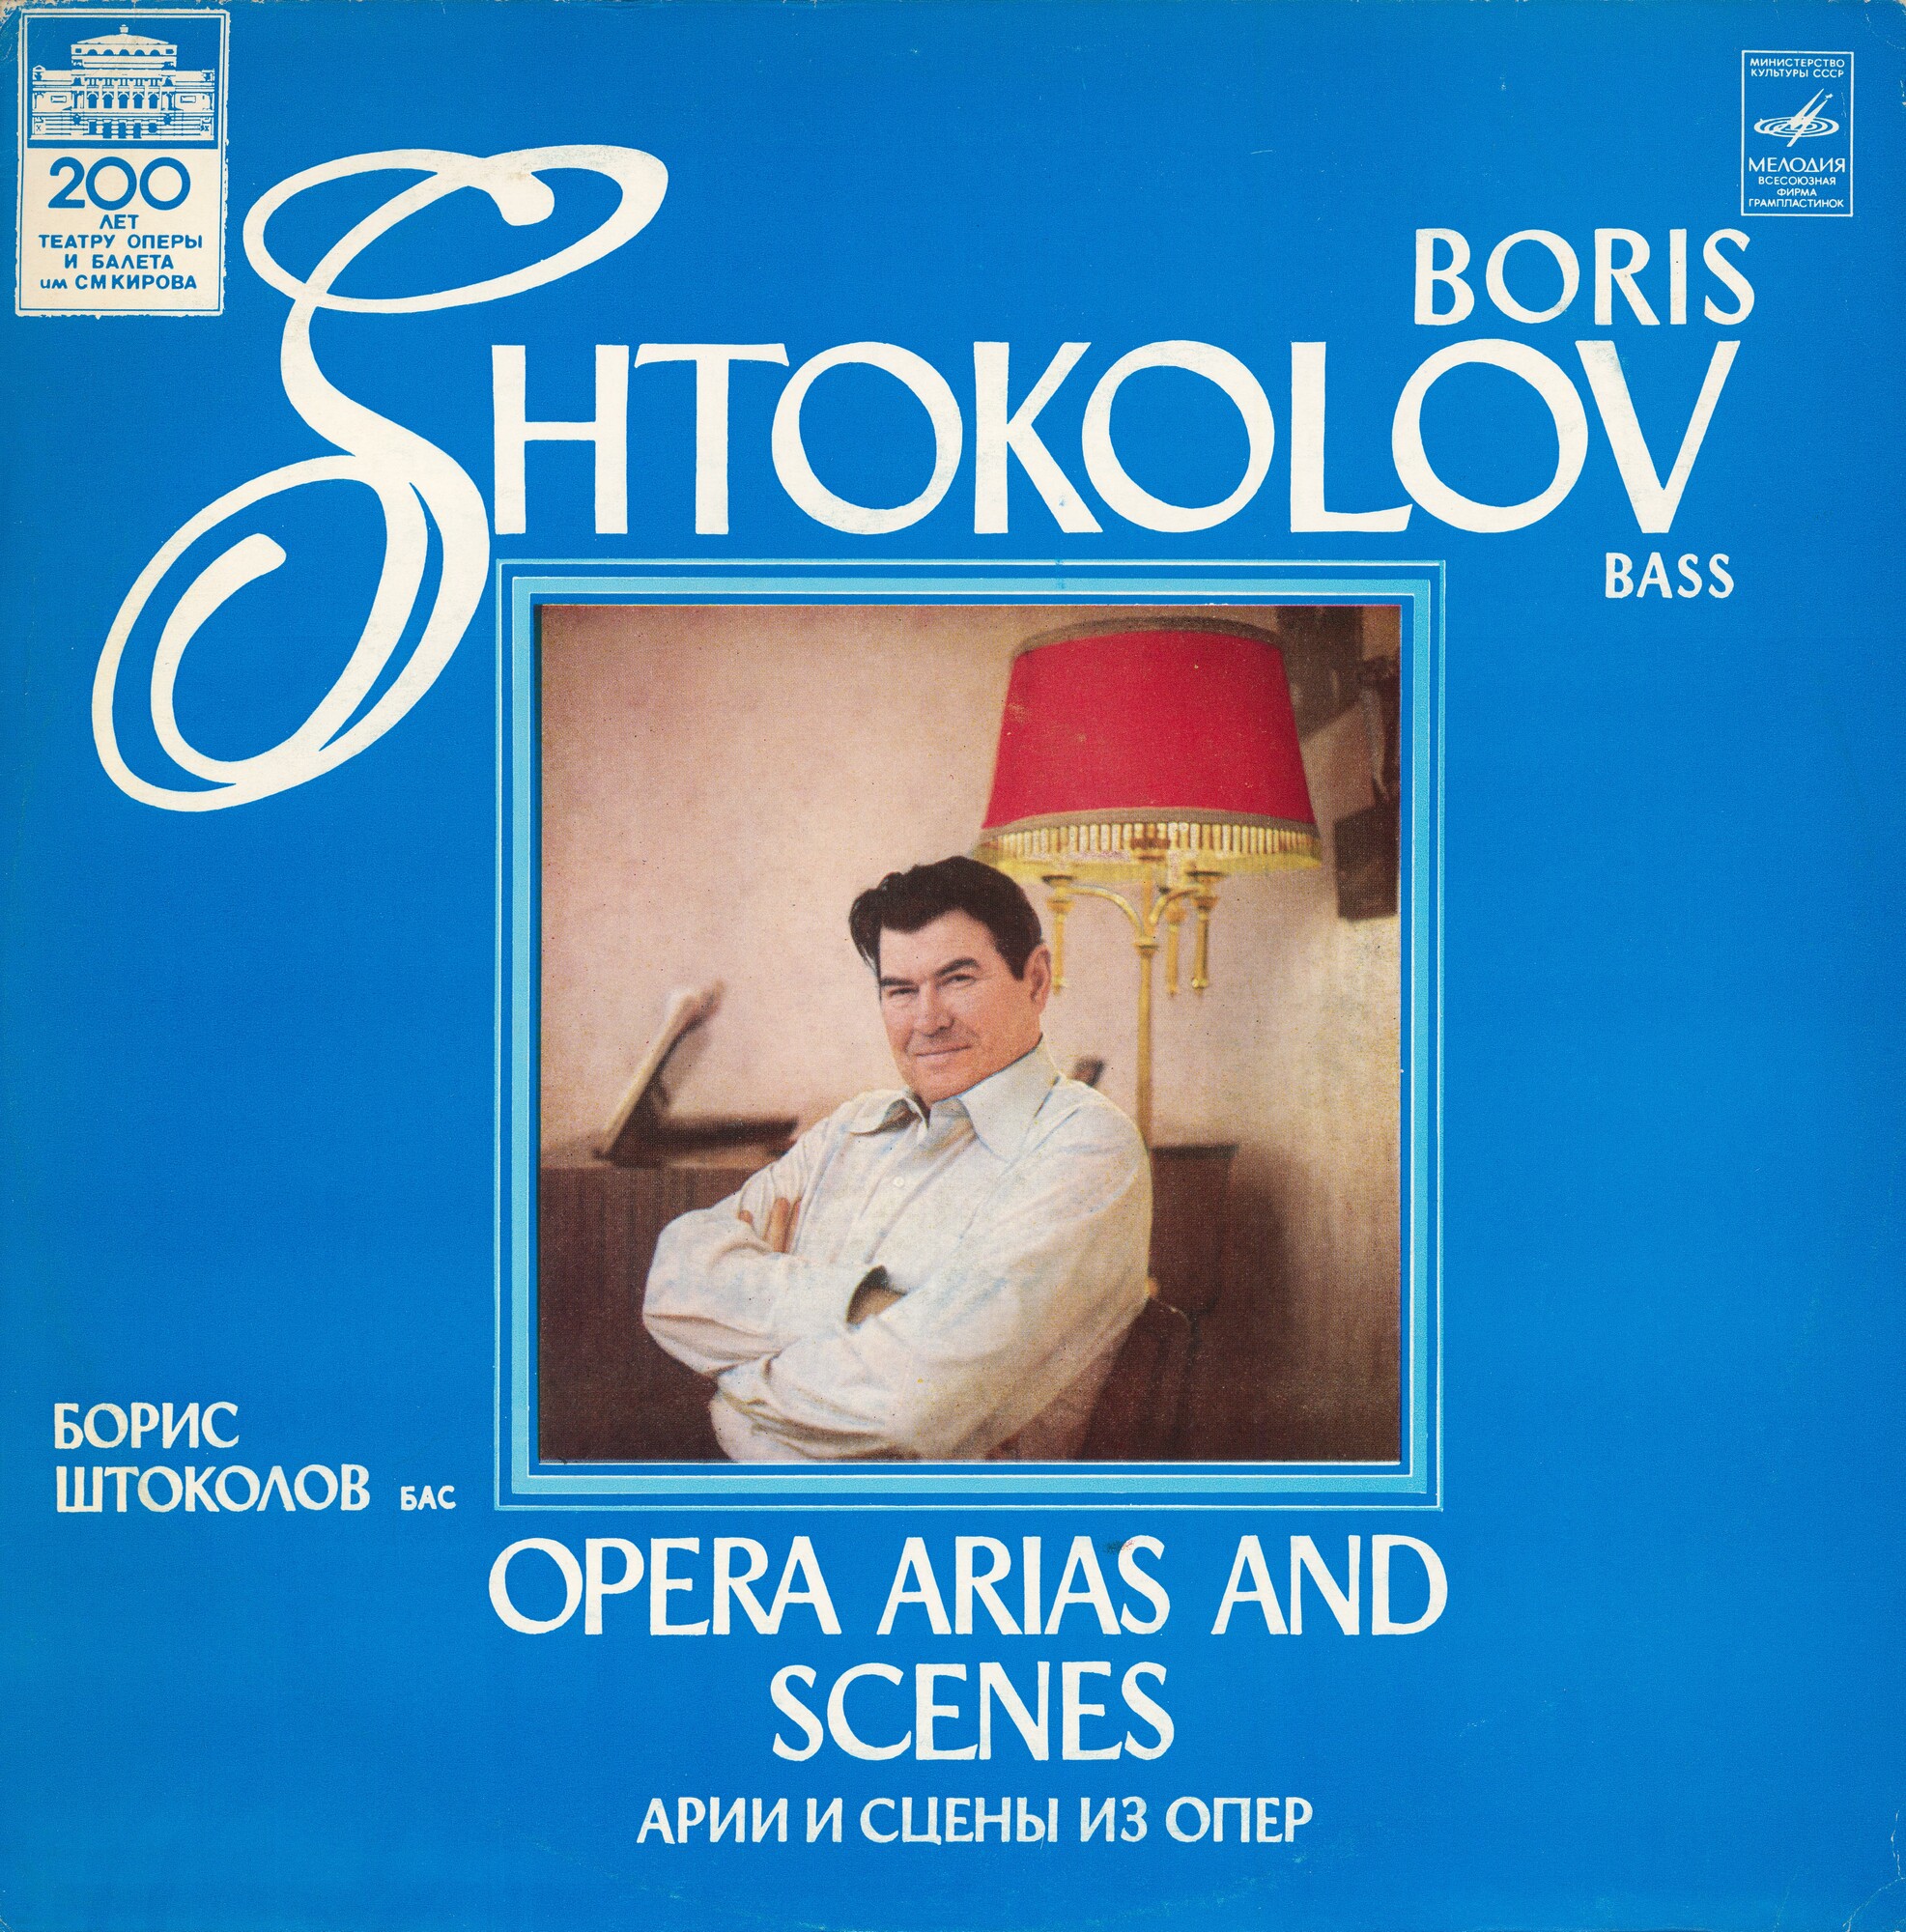 Борис Штоколов (бас). Арии и сцены из опер